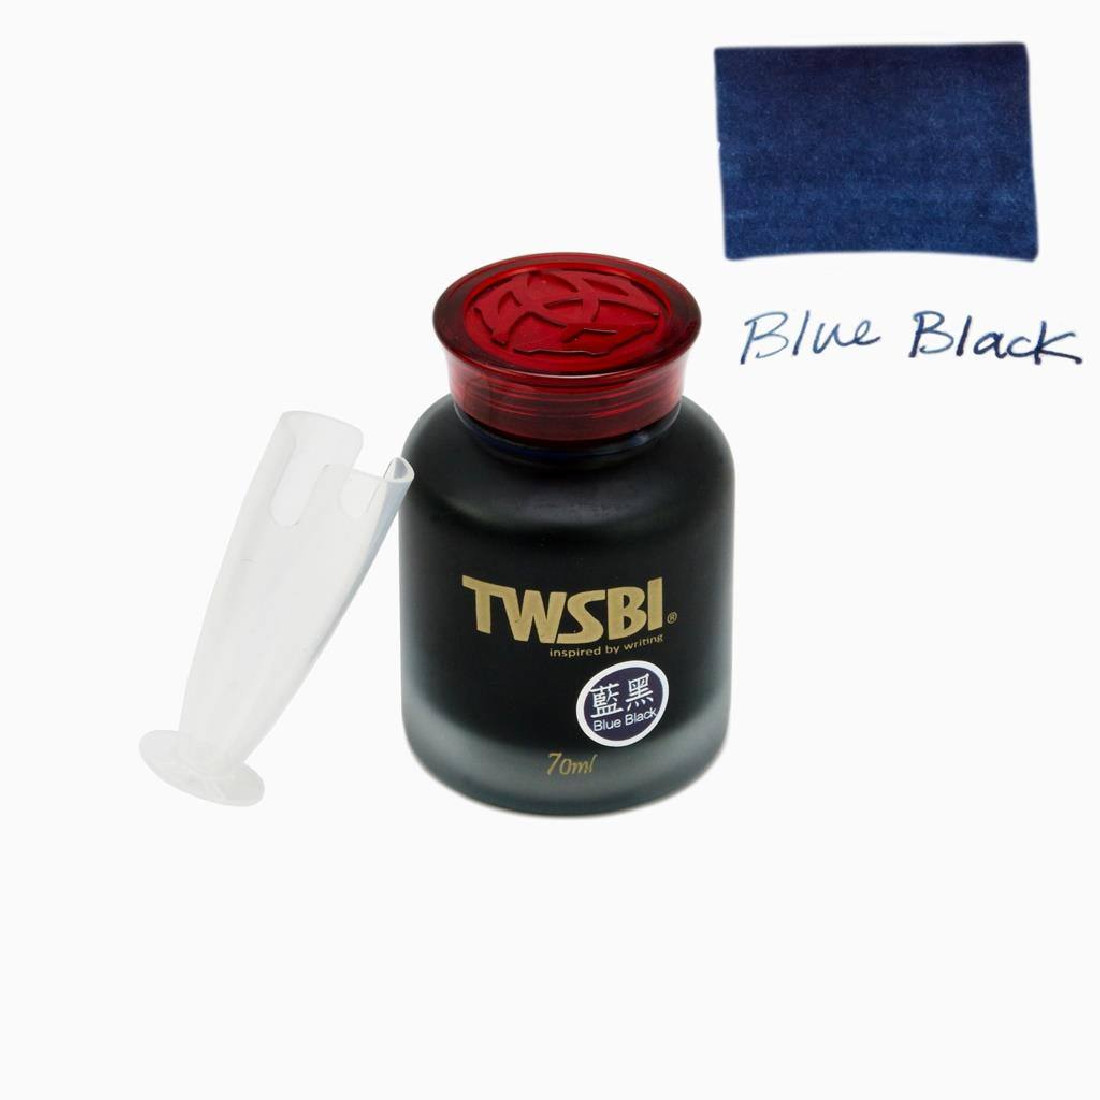 Twsbi 70ml ink blue black iron gall